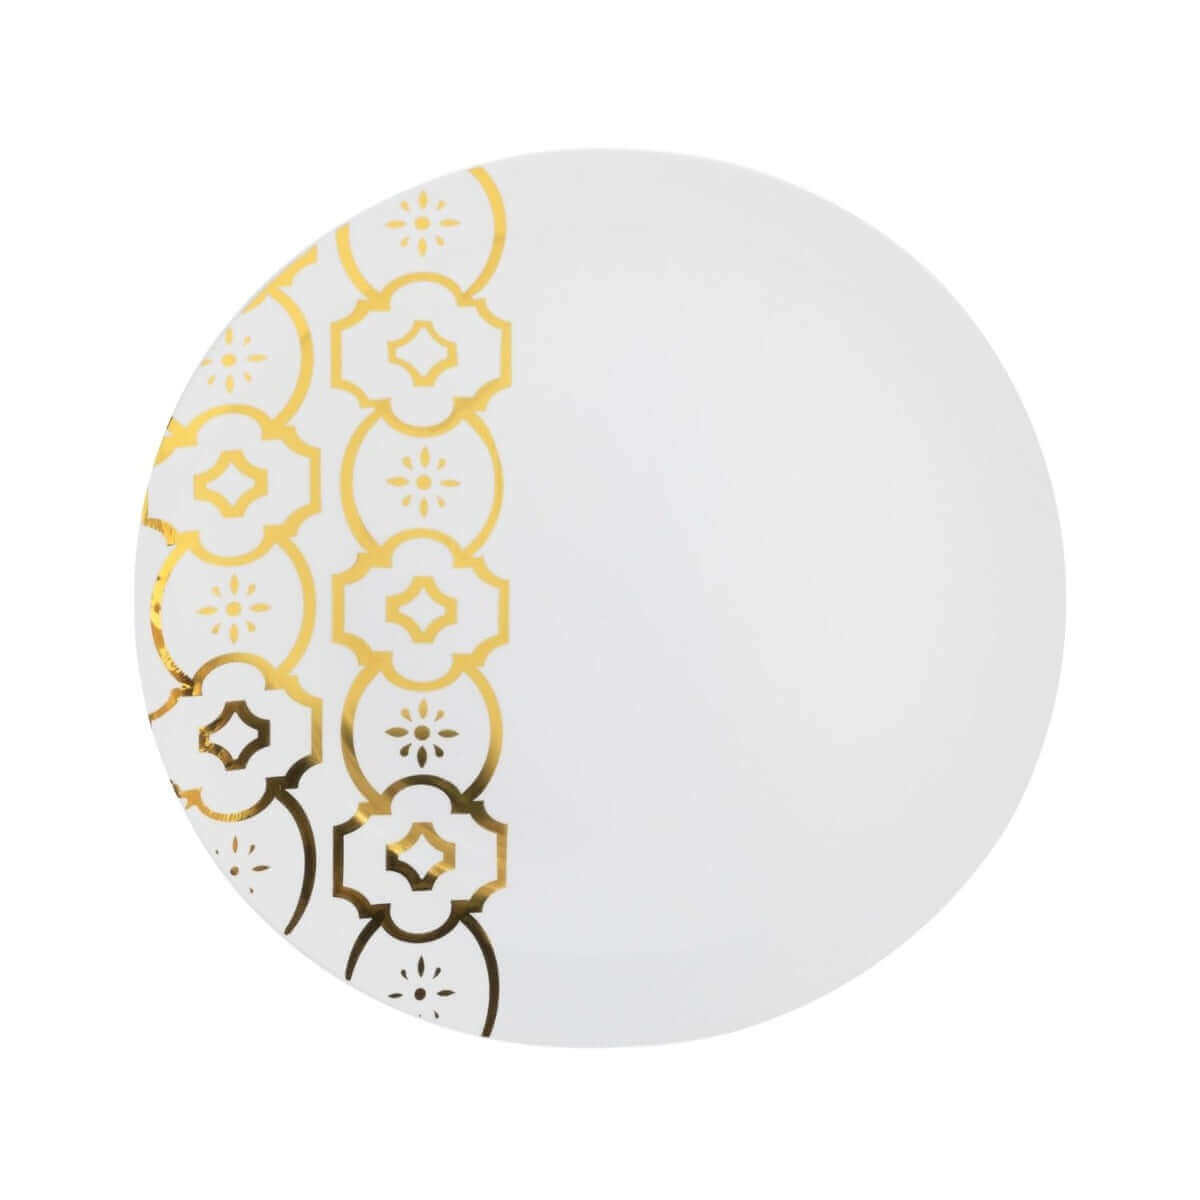 10" Moroccan Design Plastic Plates (40 Count) - Yom Tov Settings